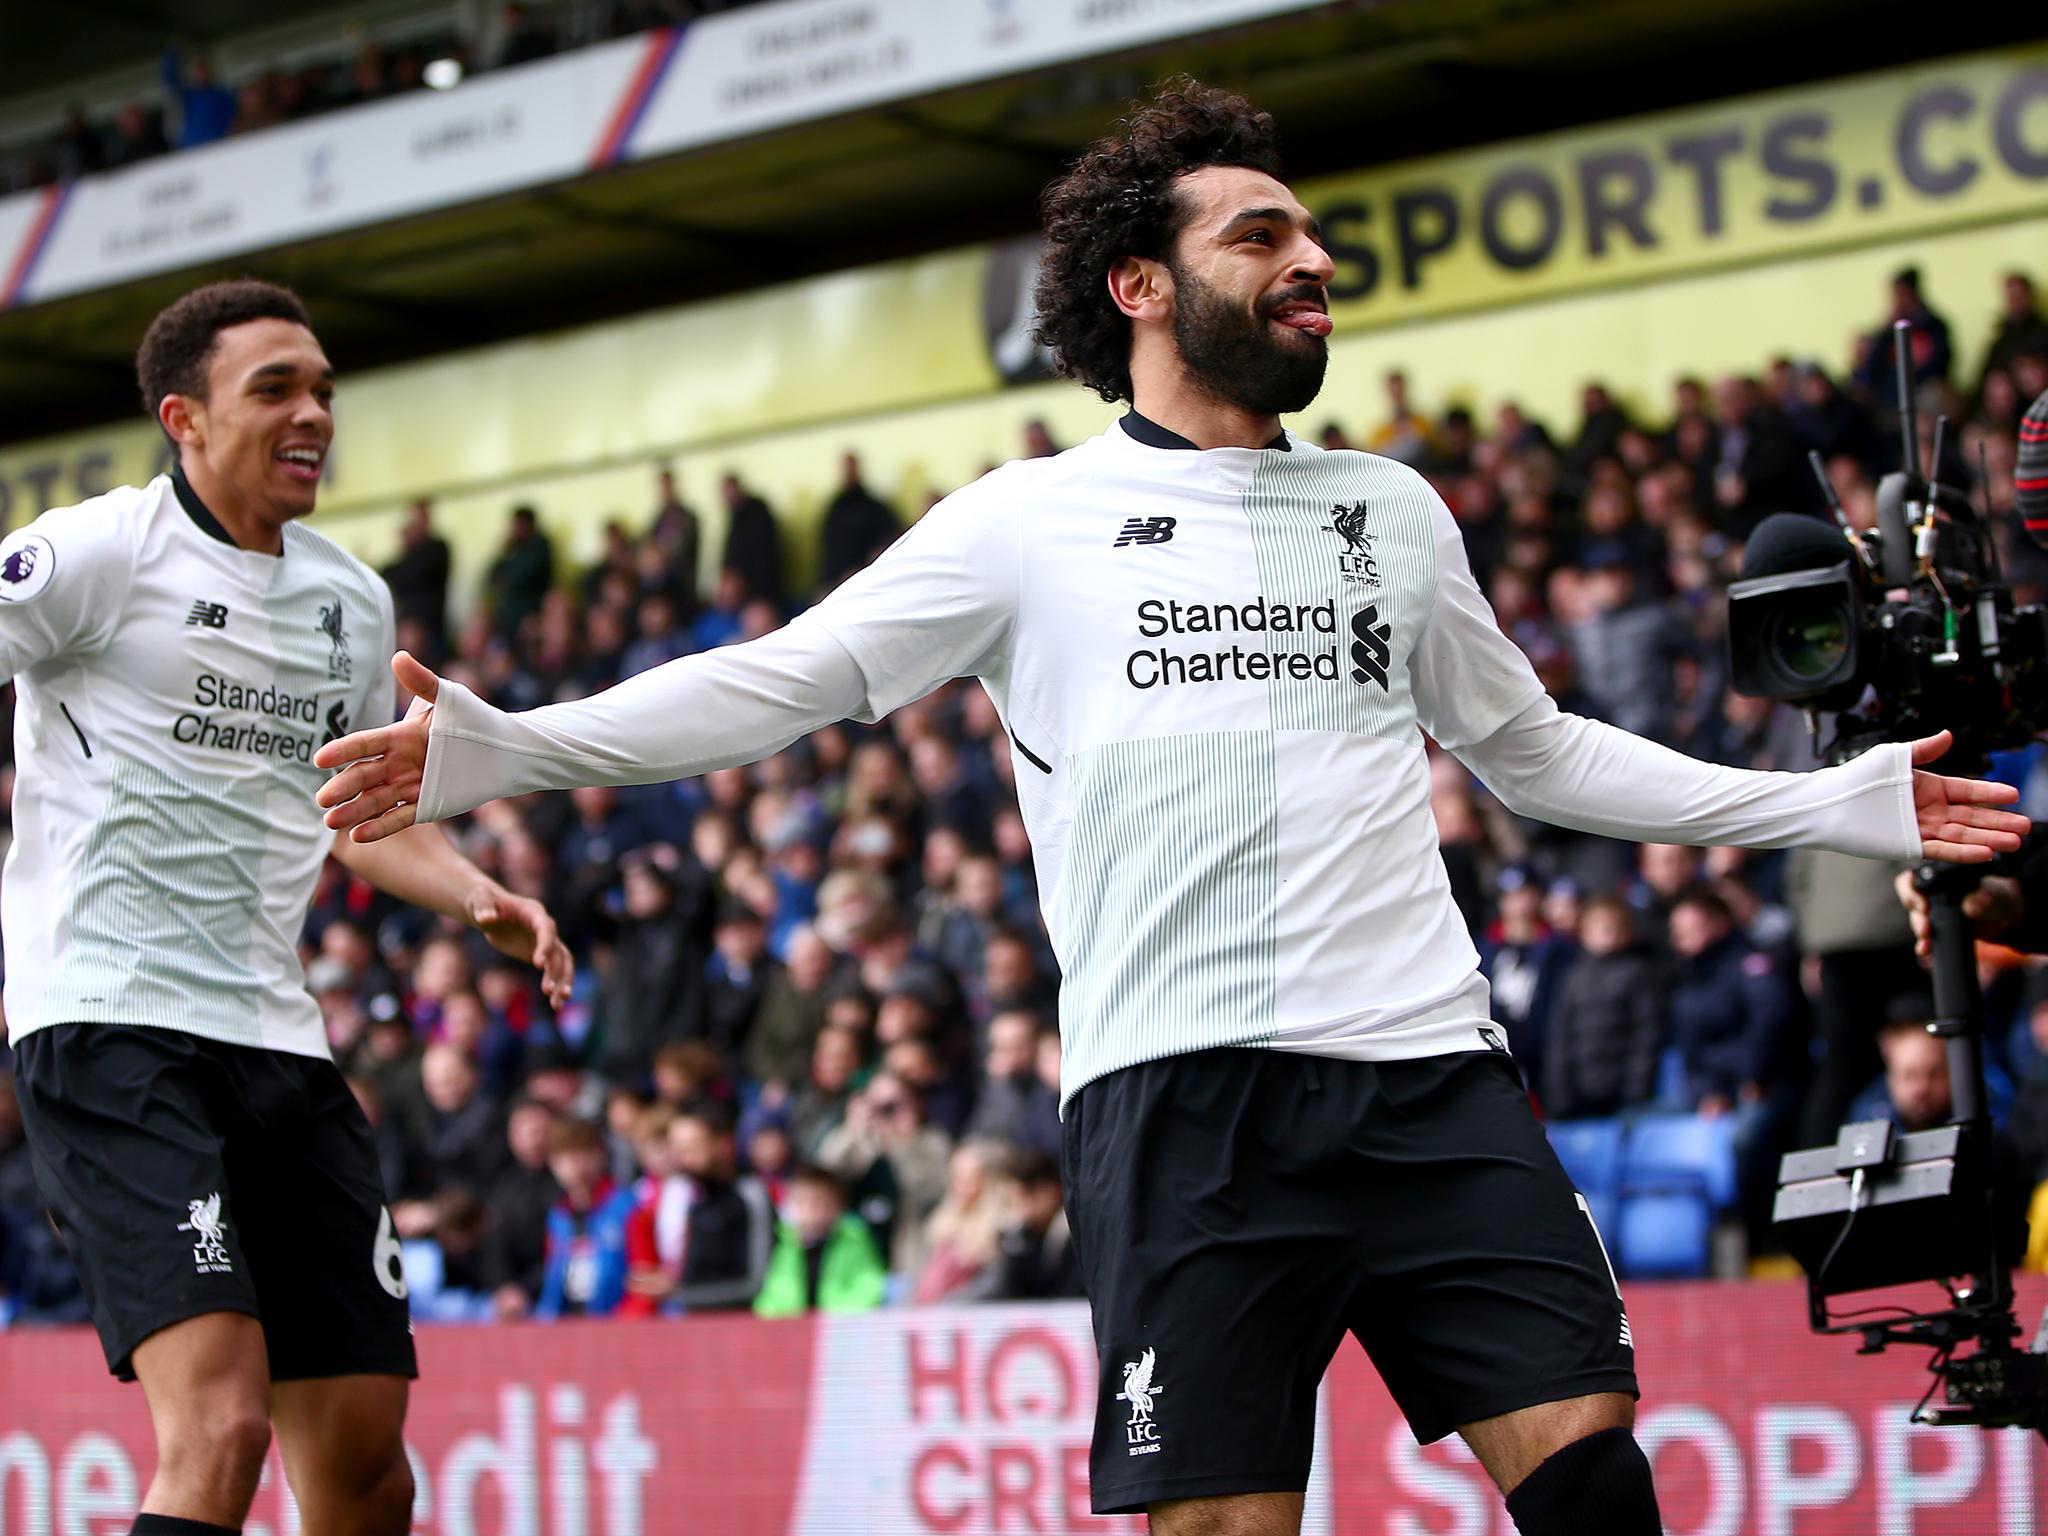 Mohamed Salah celebrates after scoring the winning goal for Liverpool